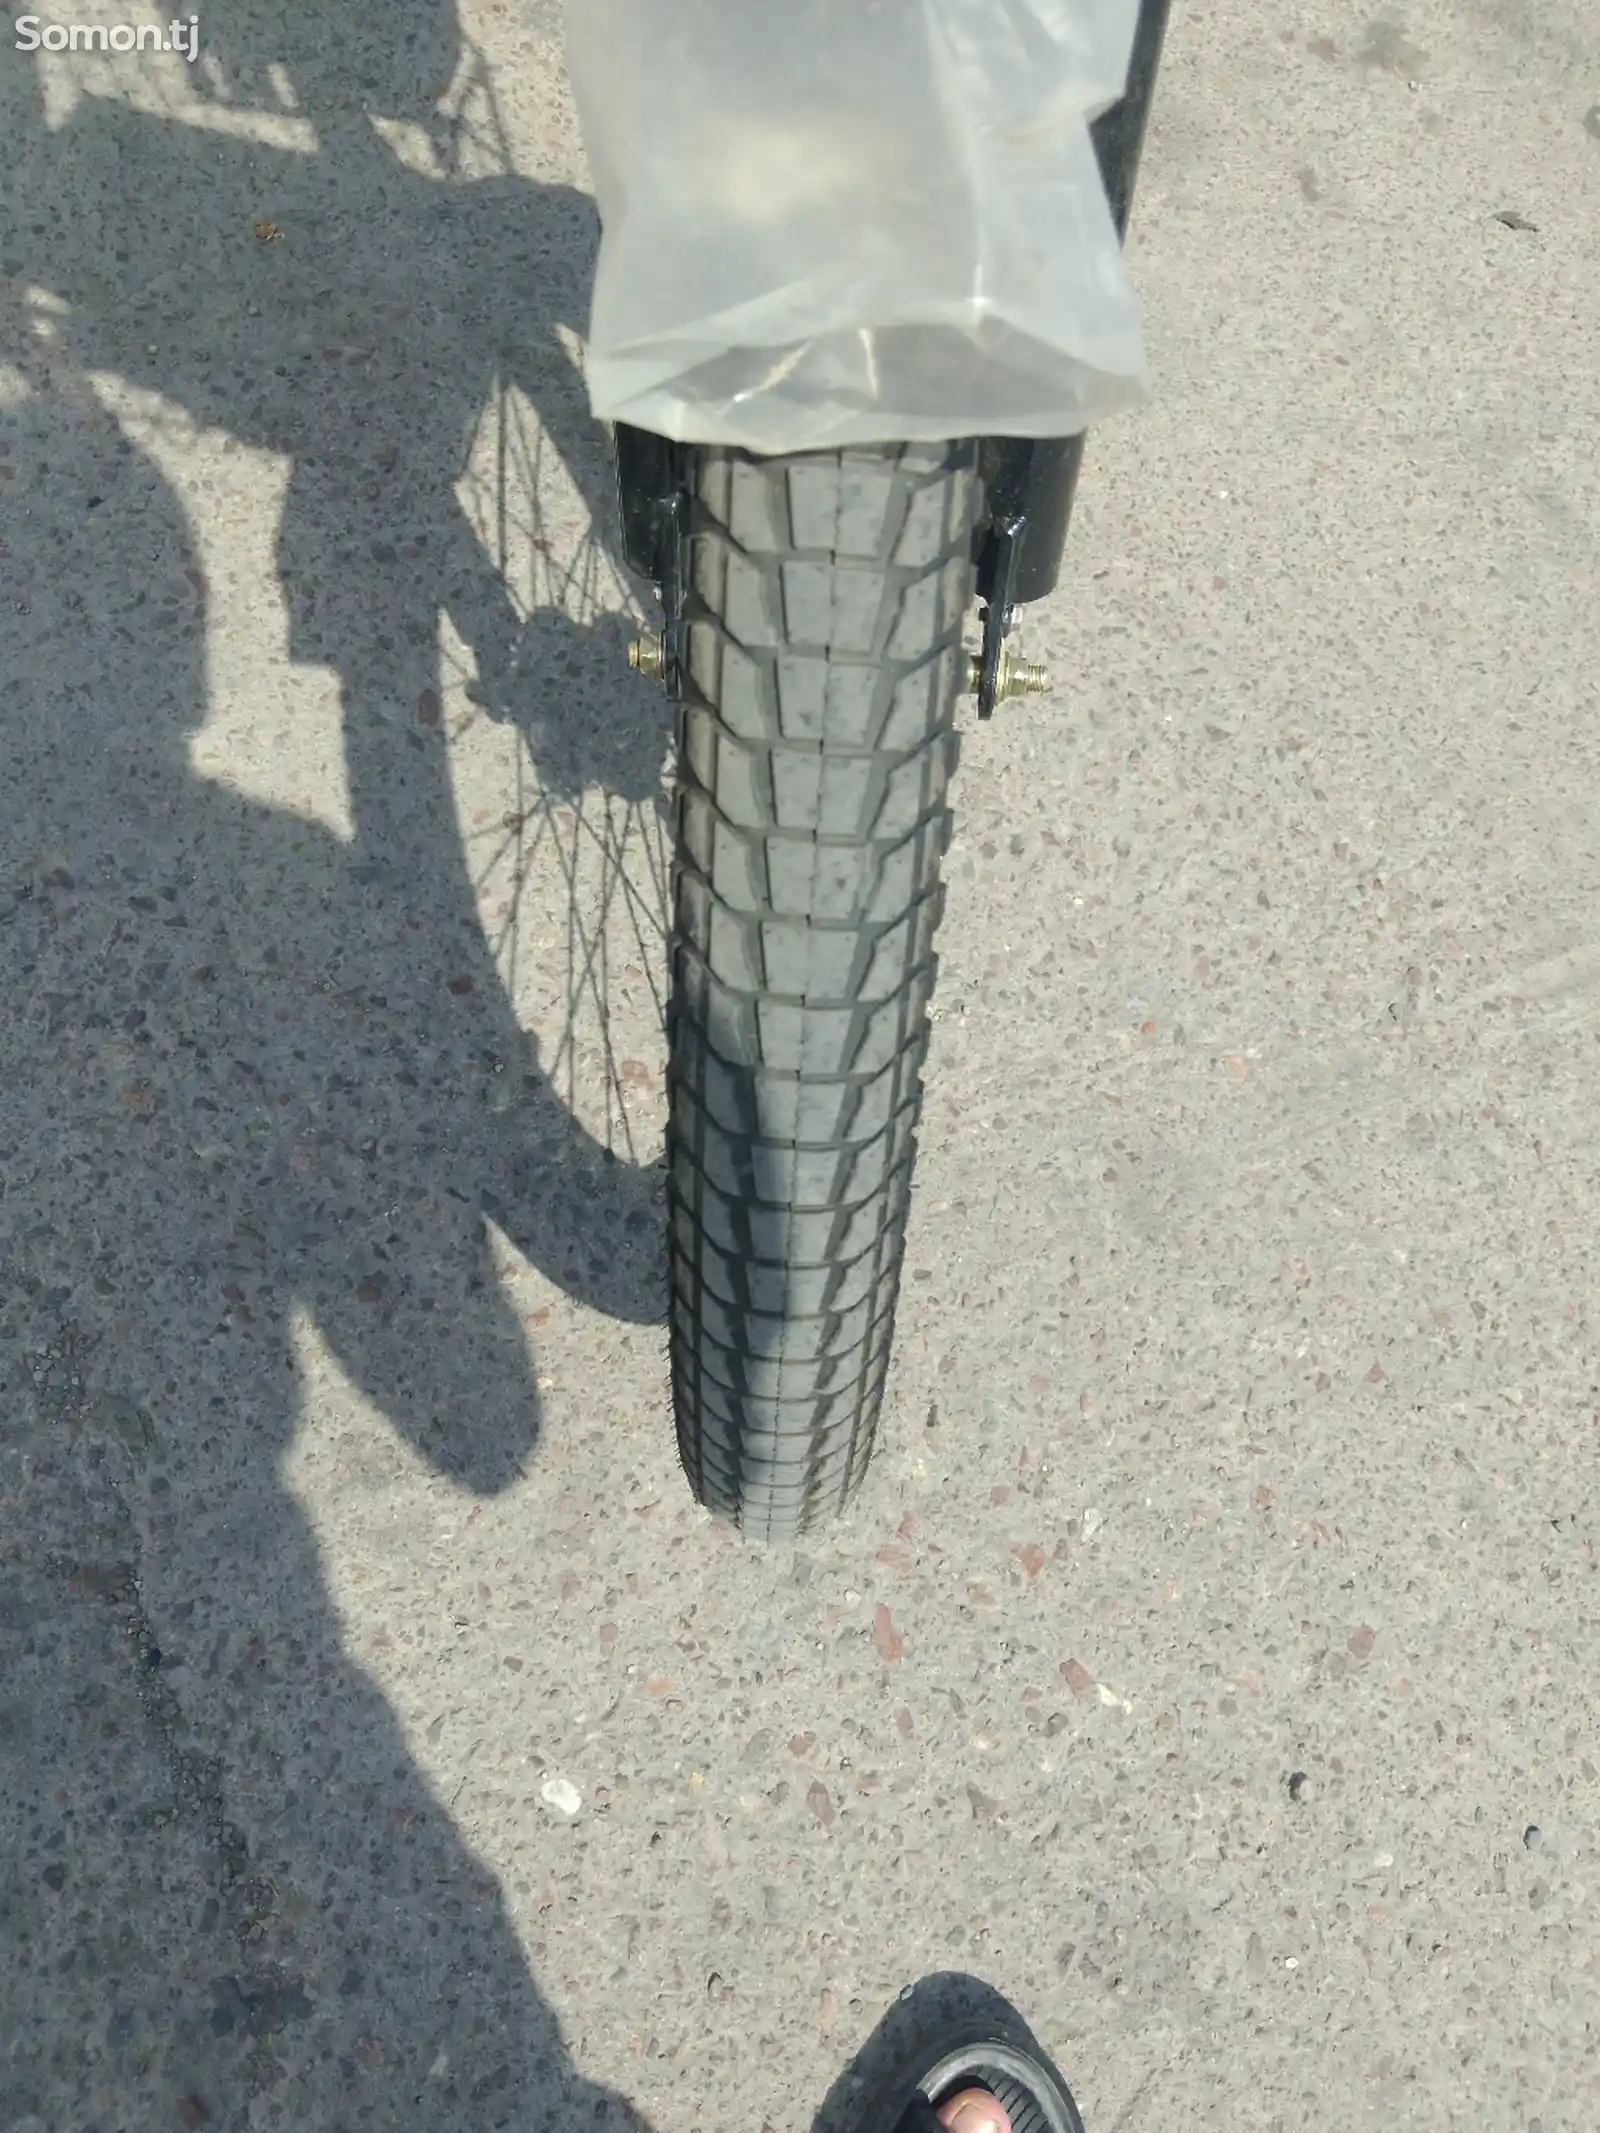 Электровелосипед-4